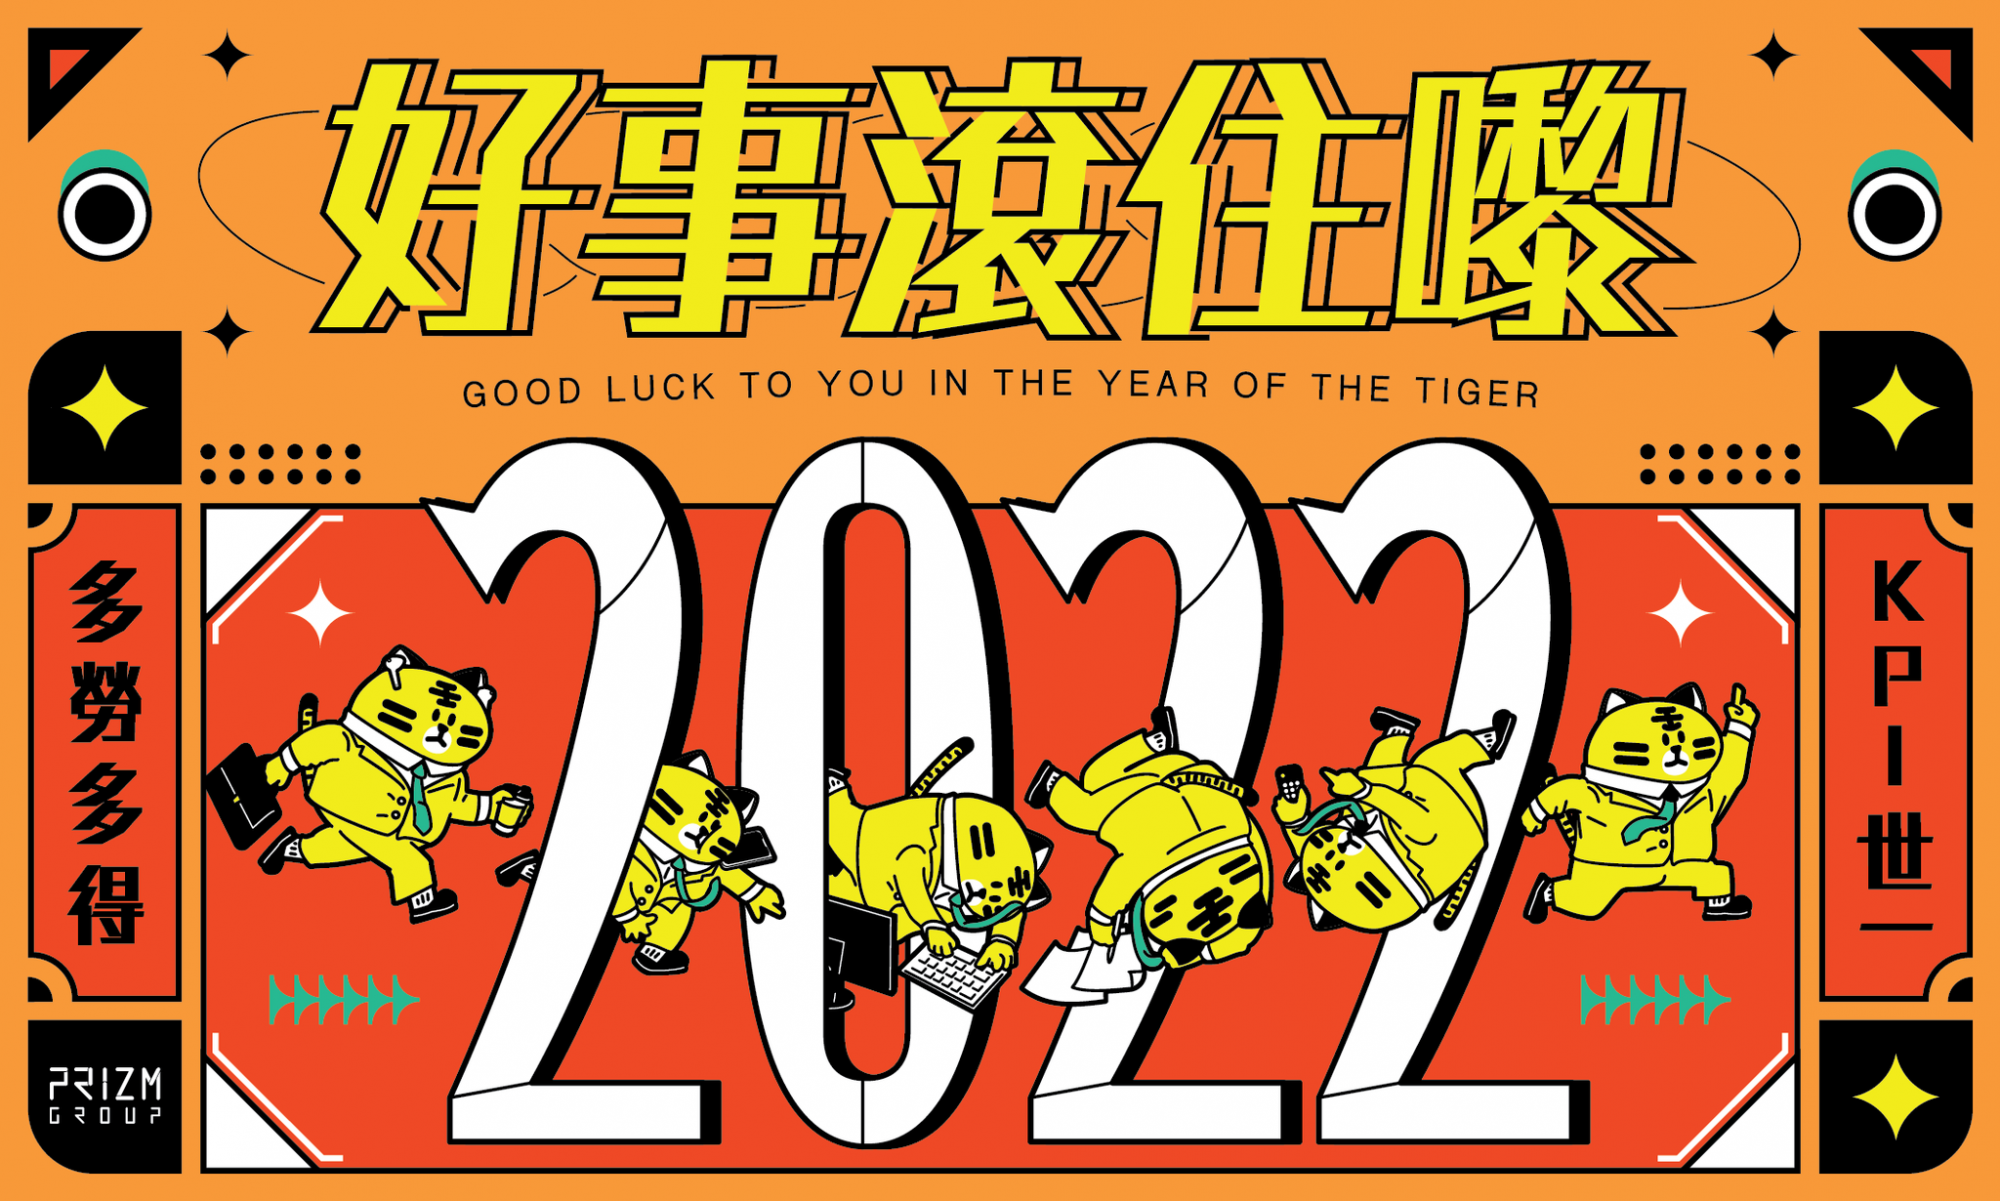 Happy Tiger Year to everyone 🐯